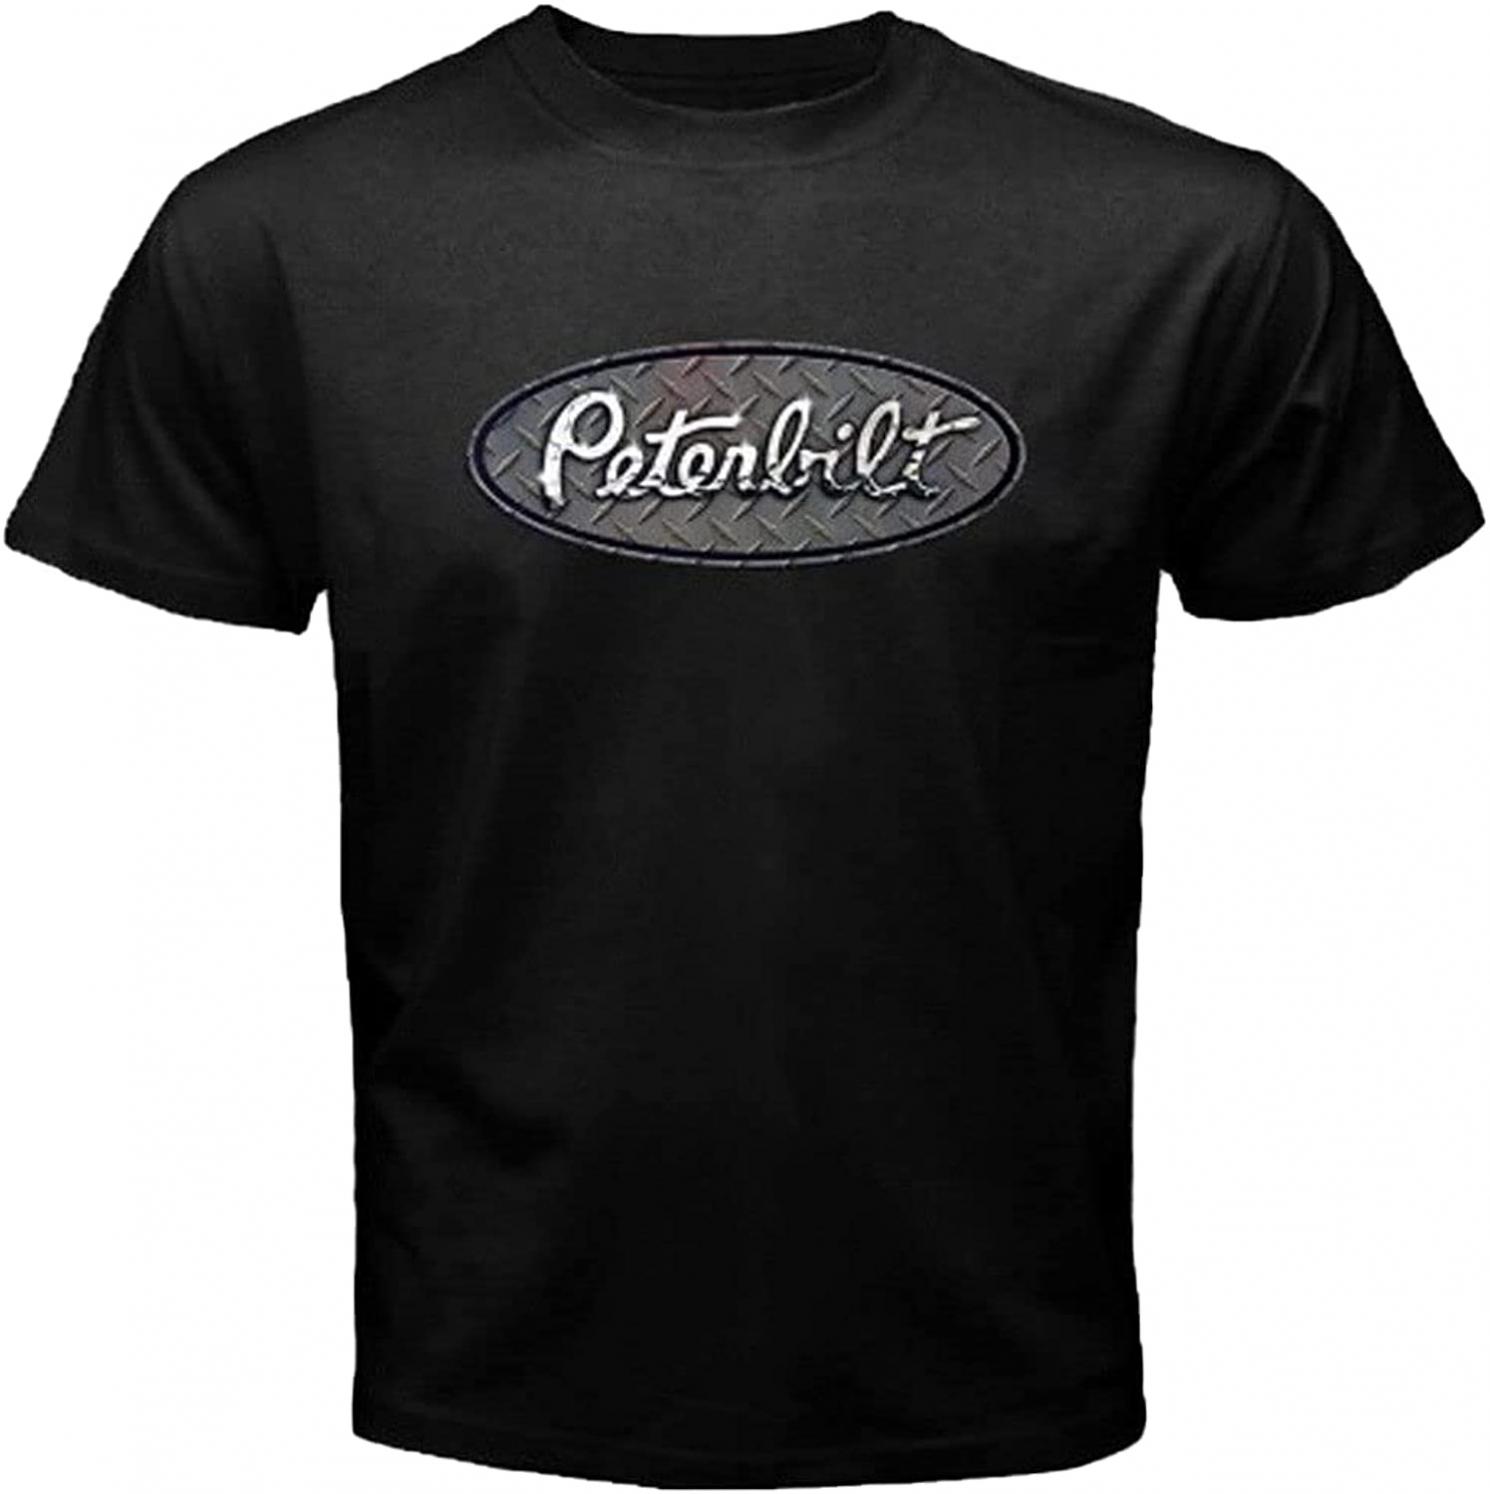 New Peterbilt Trucker Classic Racing Logo Men’s Black T-Shirt Size S to 3XL